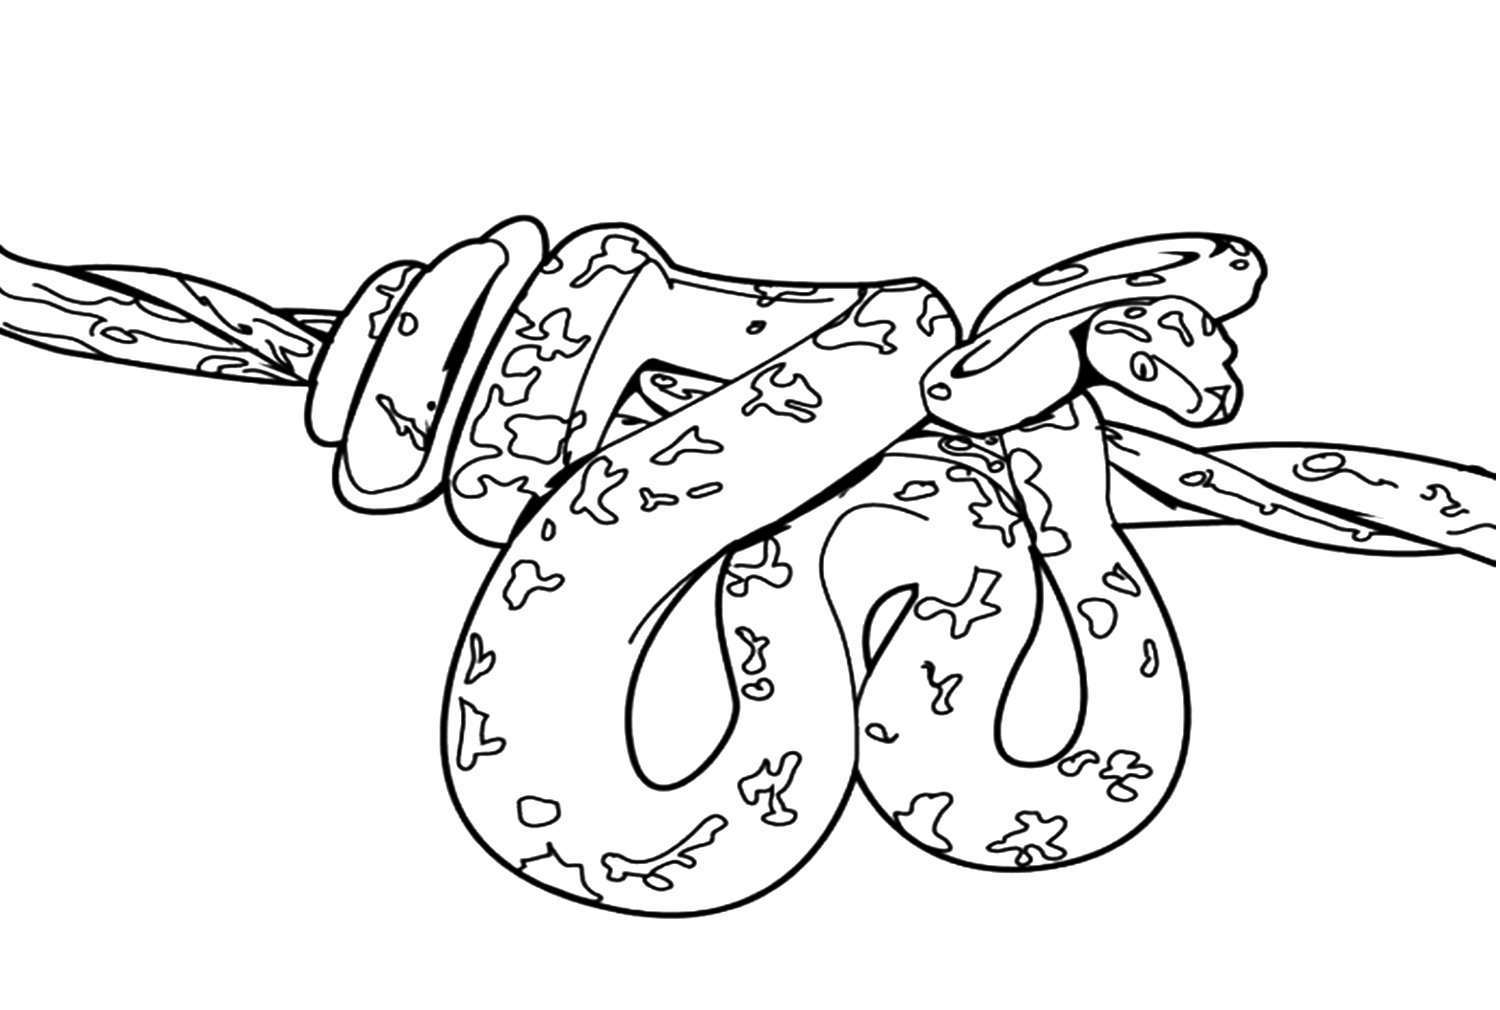 Змея раскраска. Раскраски змей. Змея раскраска для детей. Раскраска змеи для детей. Раскраска змей для детей